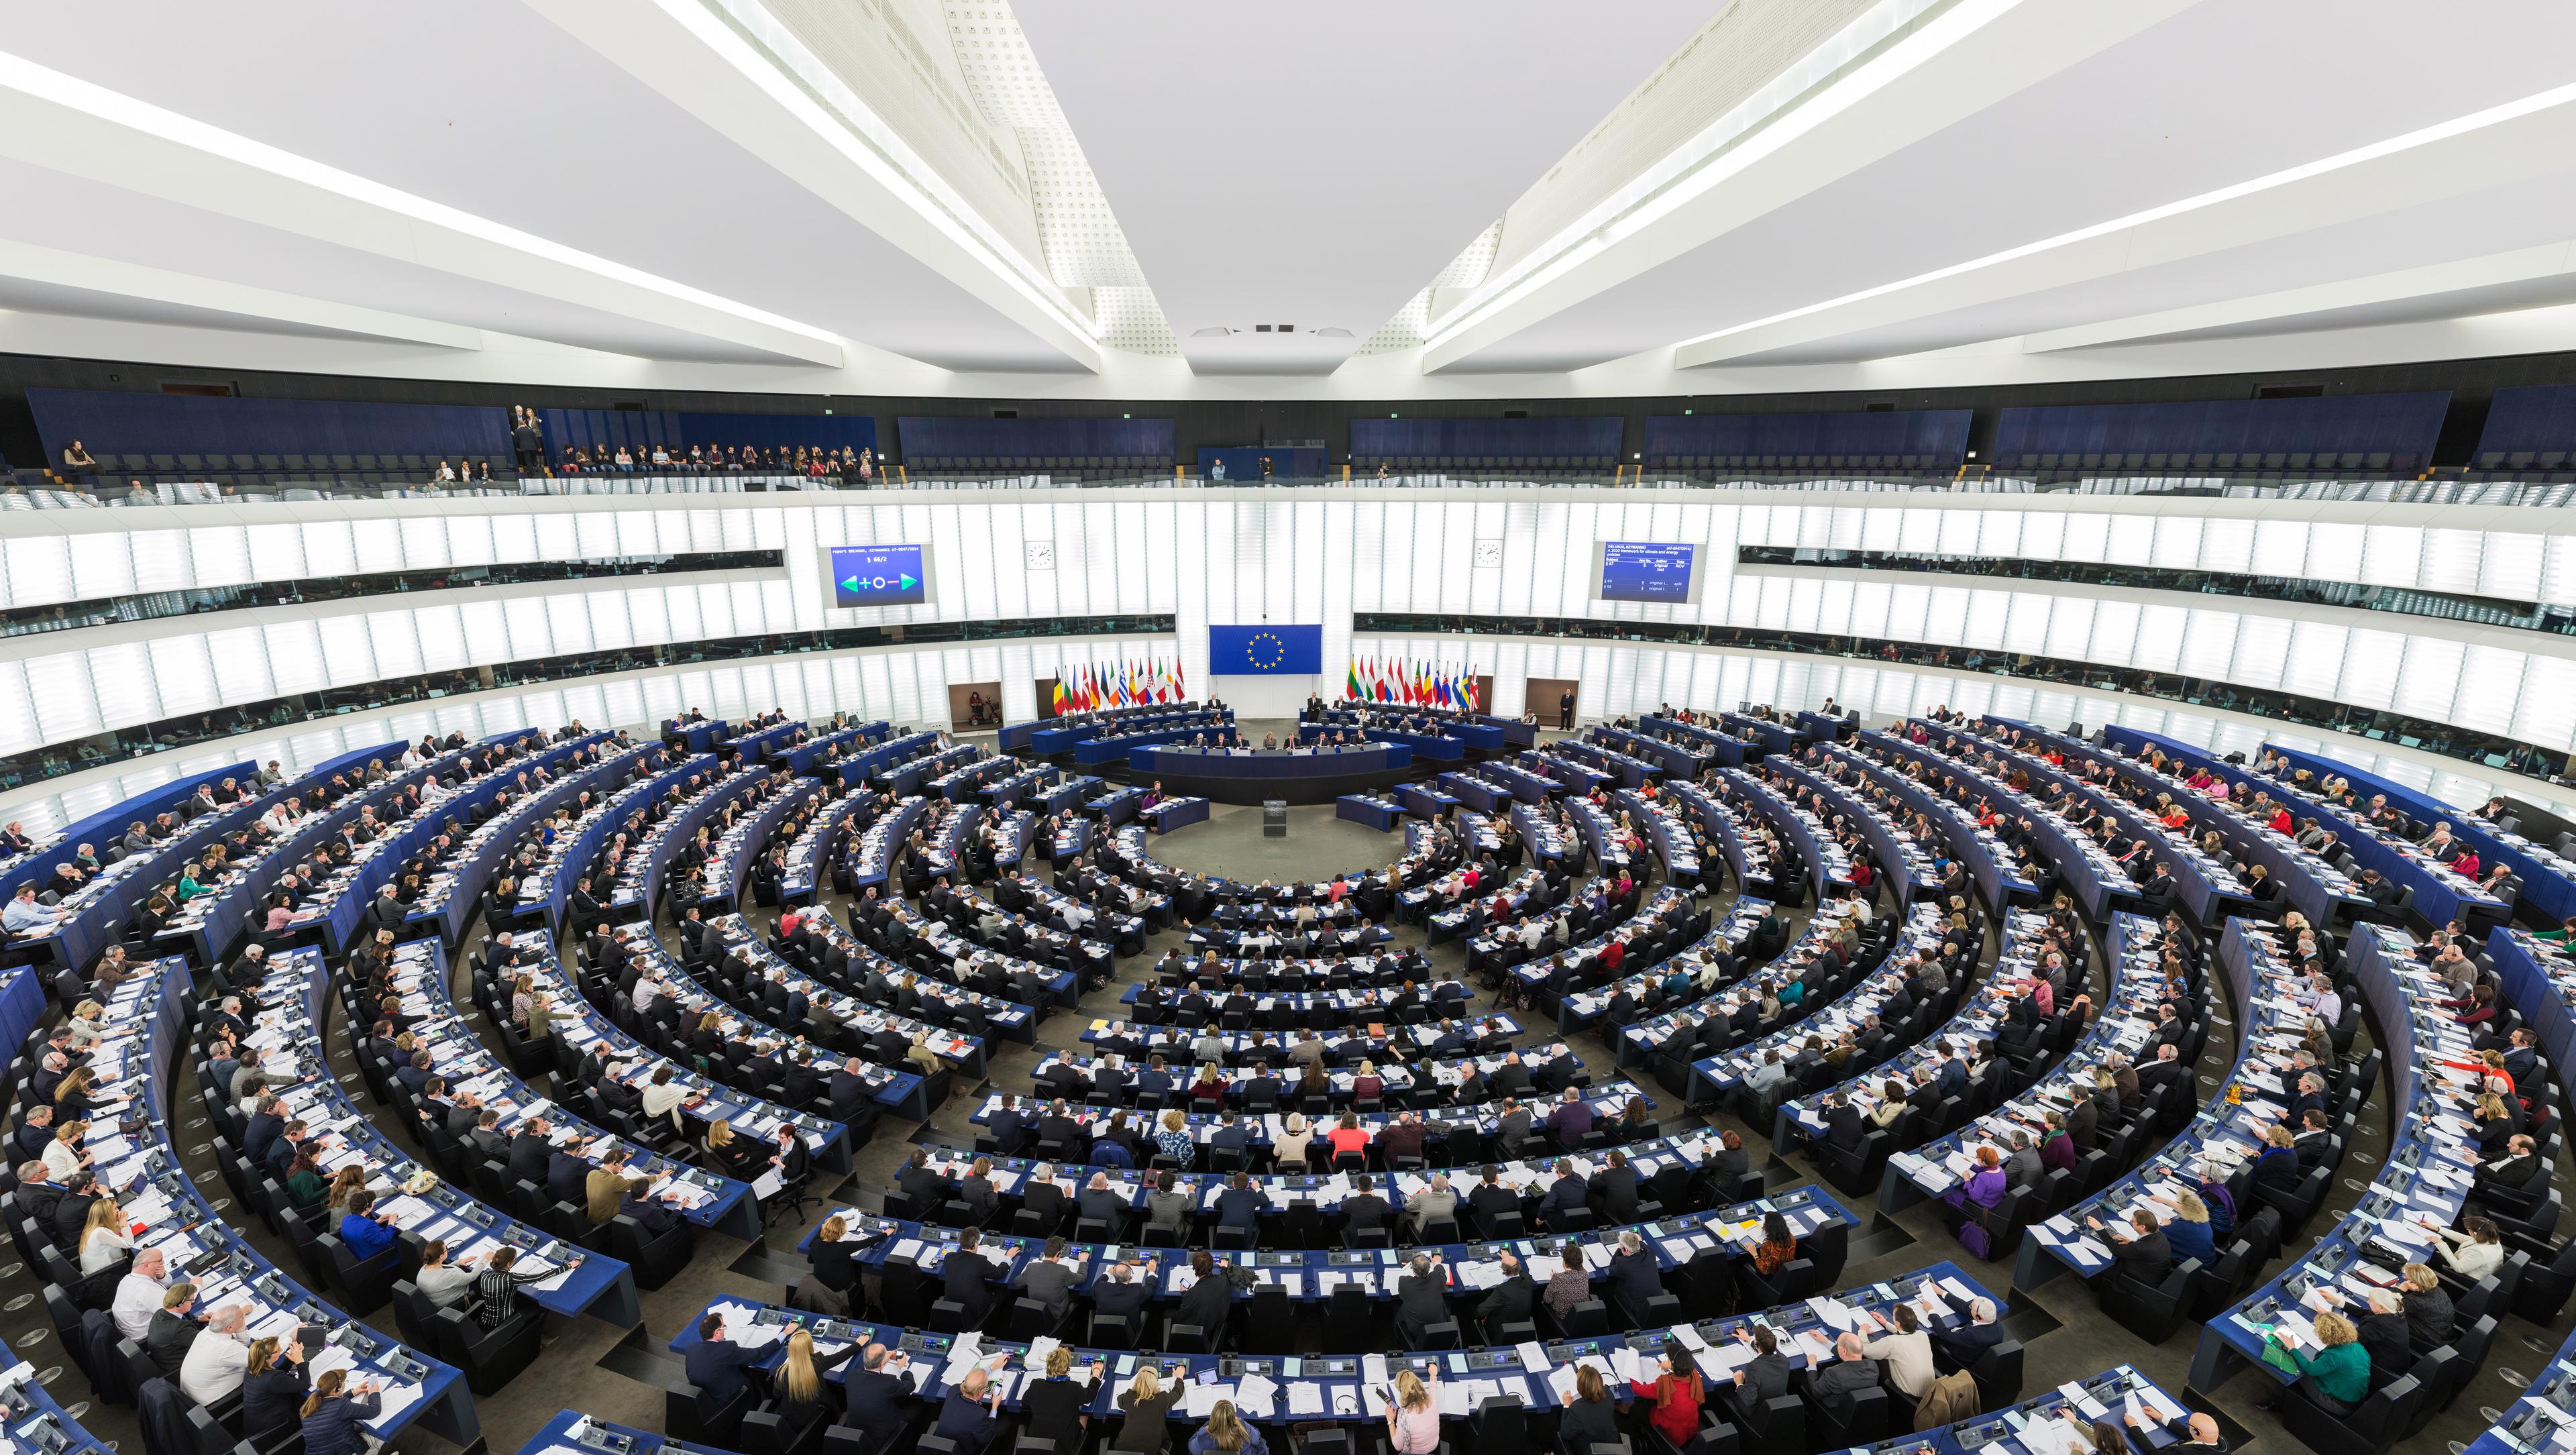 europe parliament hemicycle